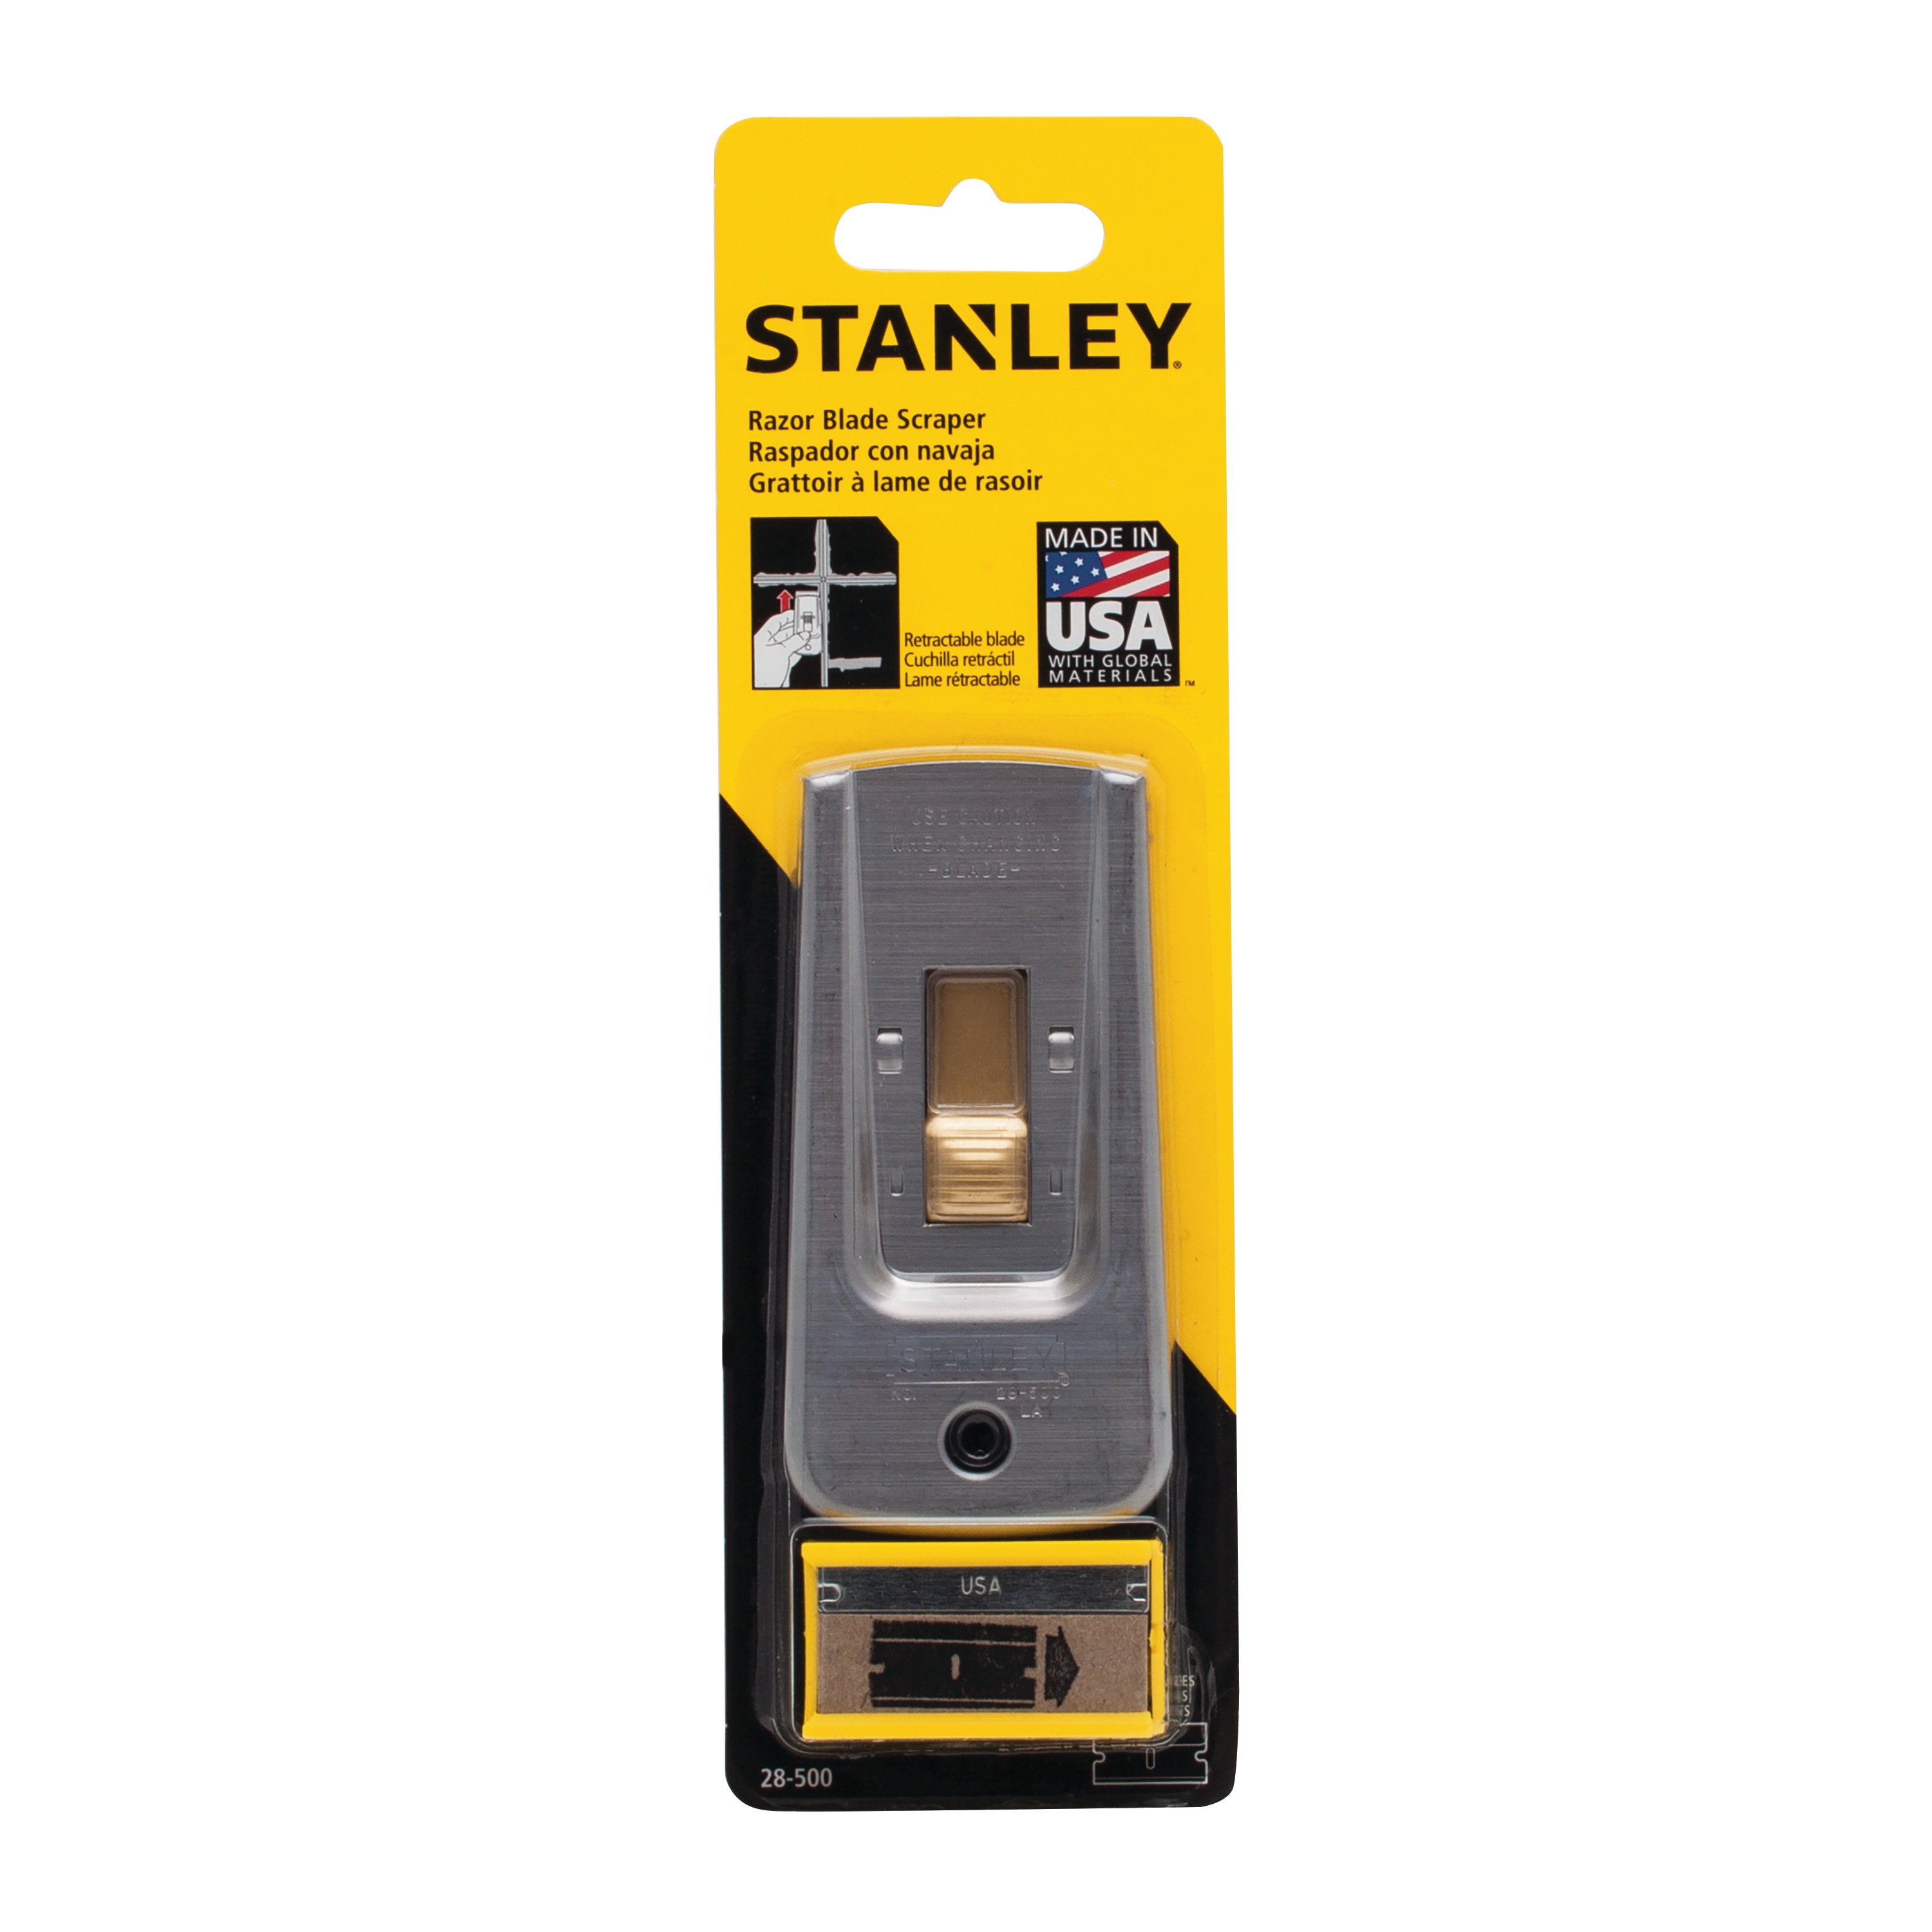 Stanley Tools - Razor Blade Scraper with 5 Blades - 28-500